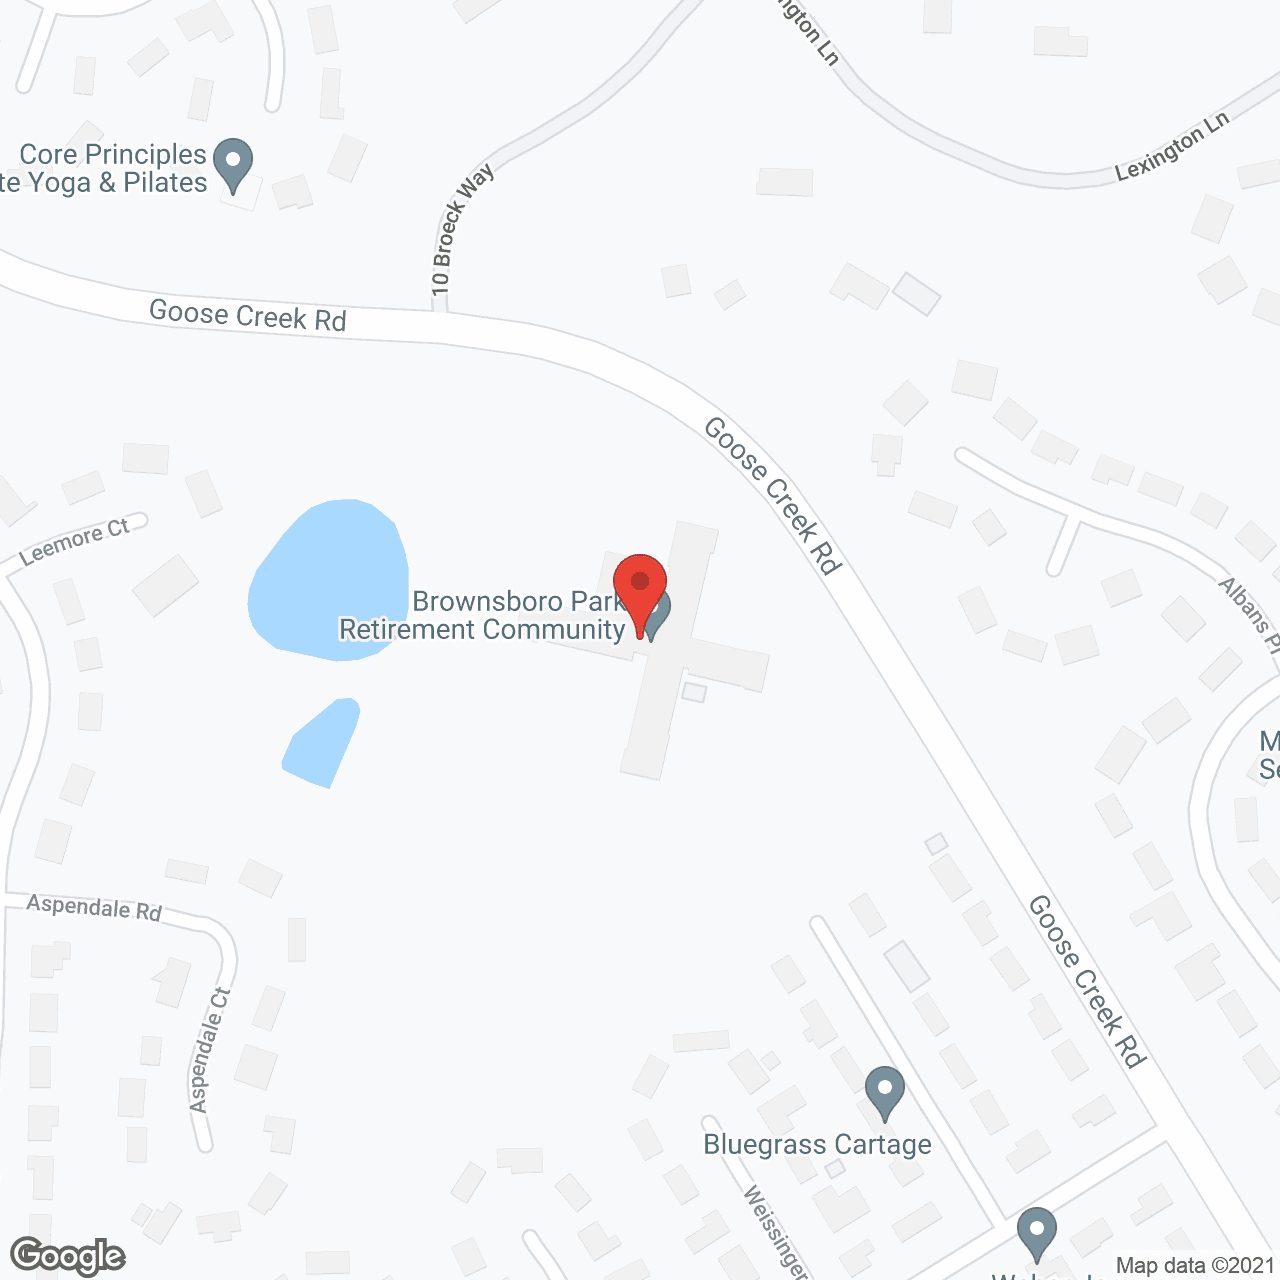 Brownsboro Park Retirement Community in google map